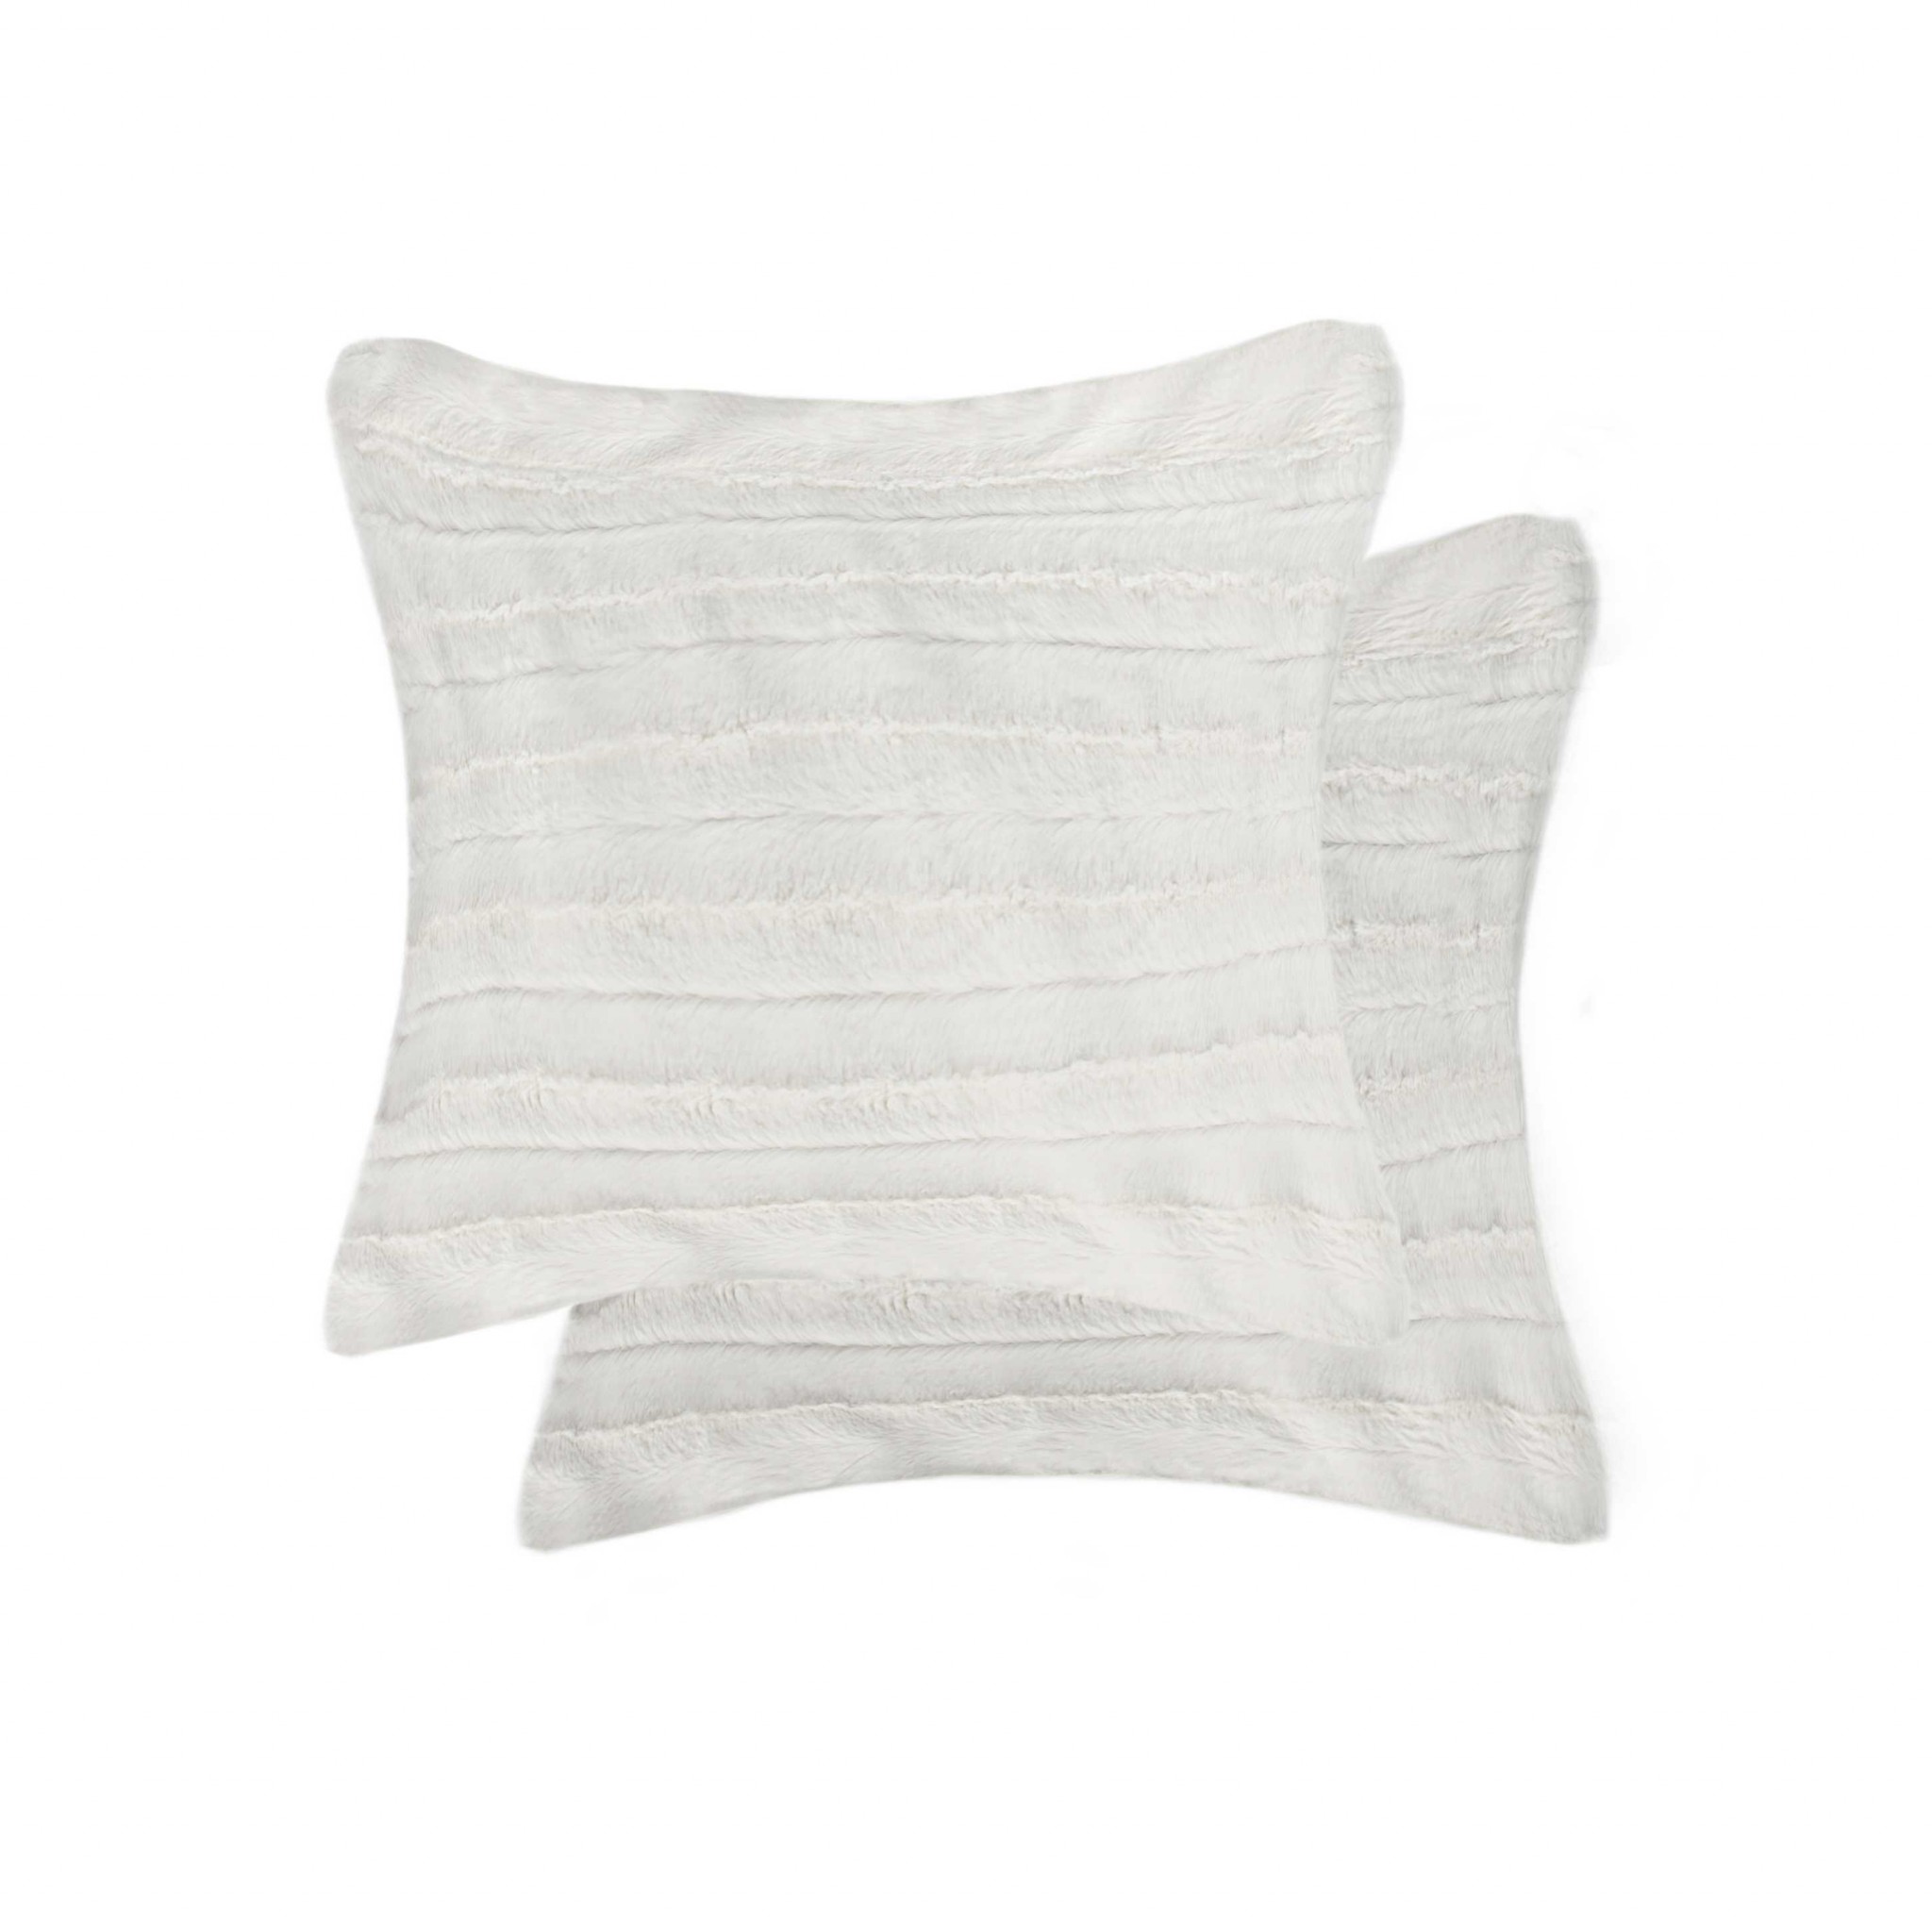 18" x 18" x 5" Off White, Linear Faux Fur - Pillow 2-Pack